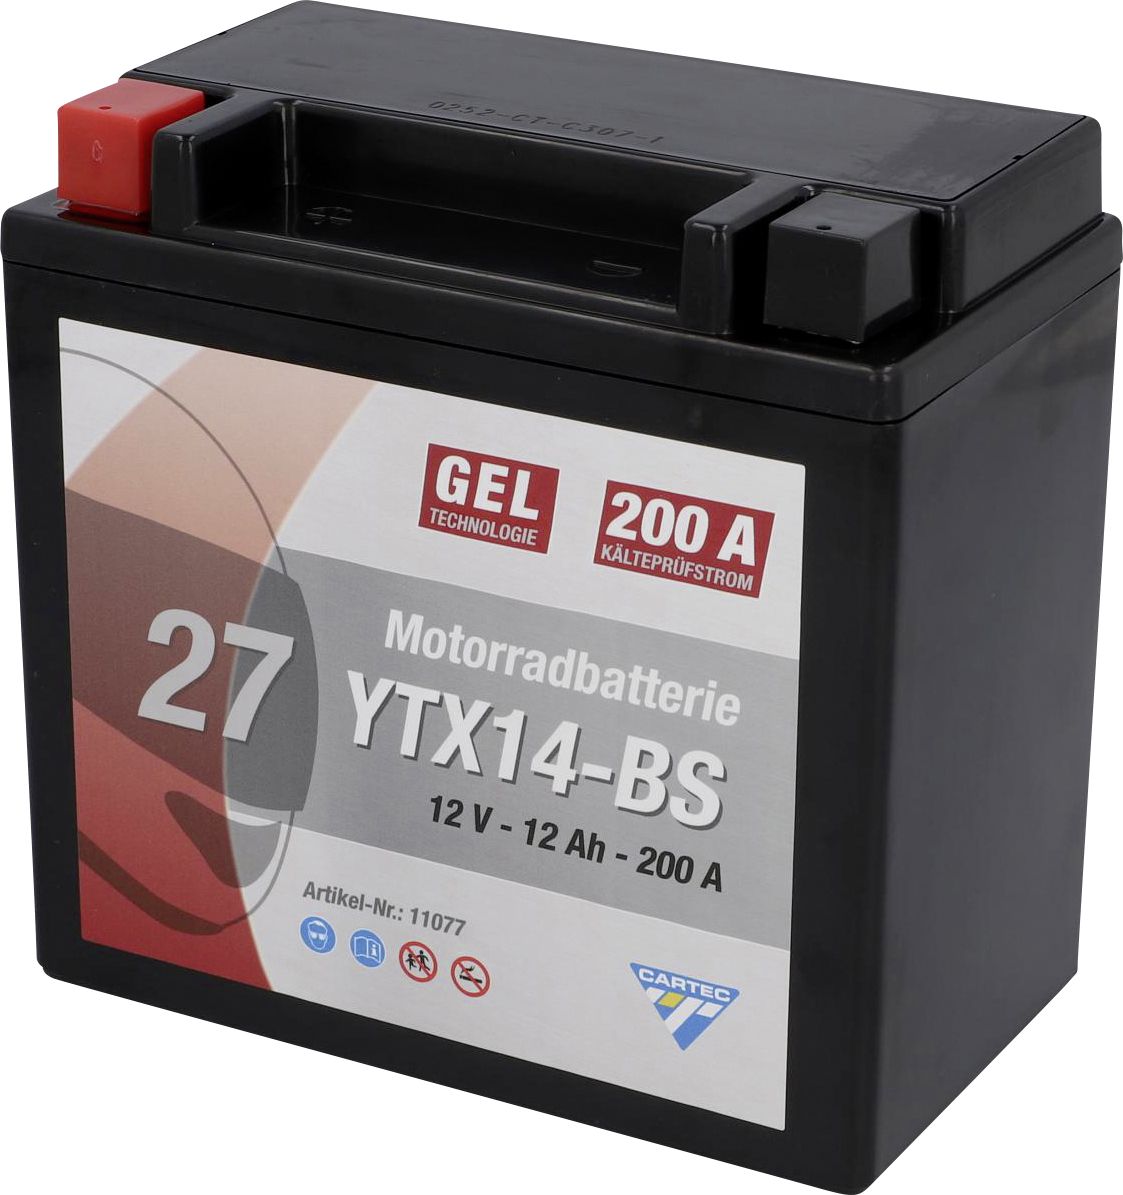 Cartec Gel Motorradbatterie YTX14-BS 12Ah 200A GLO680456086